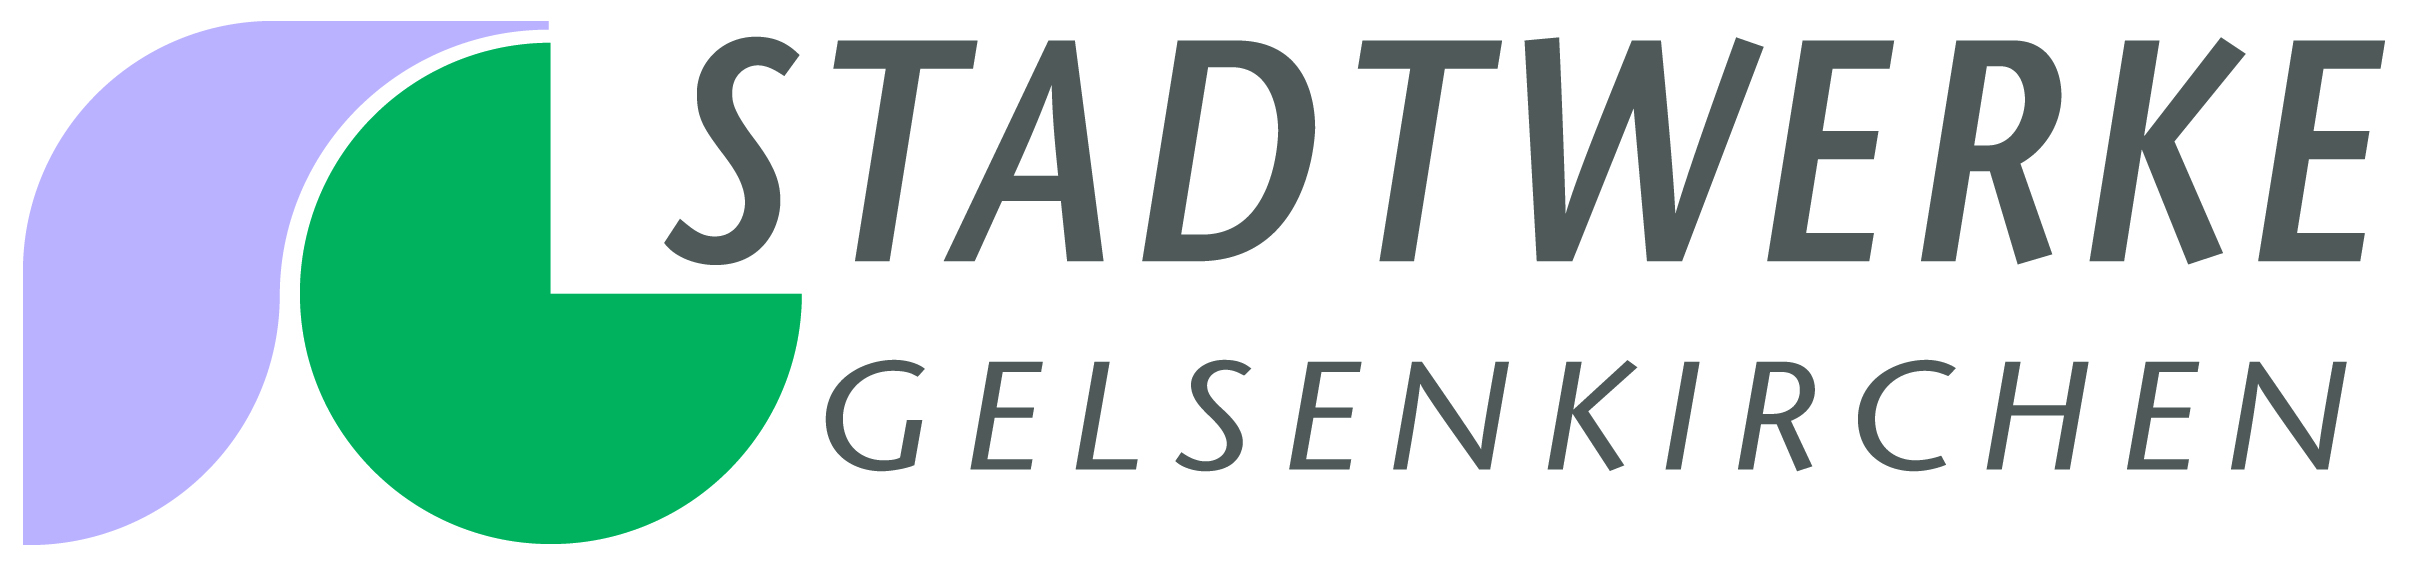 Stadtwerke Gelsenkirchen GmbH Logo